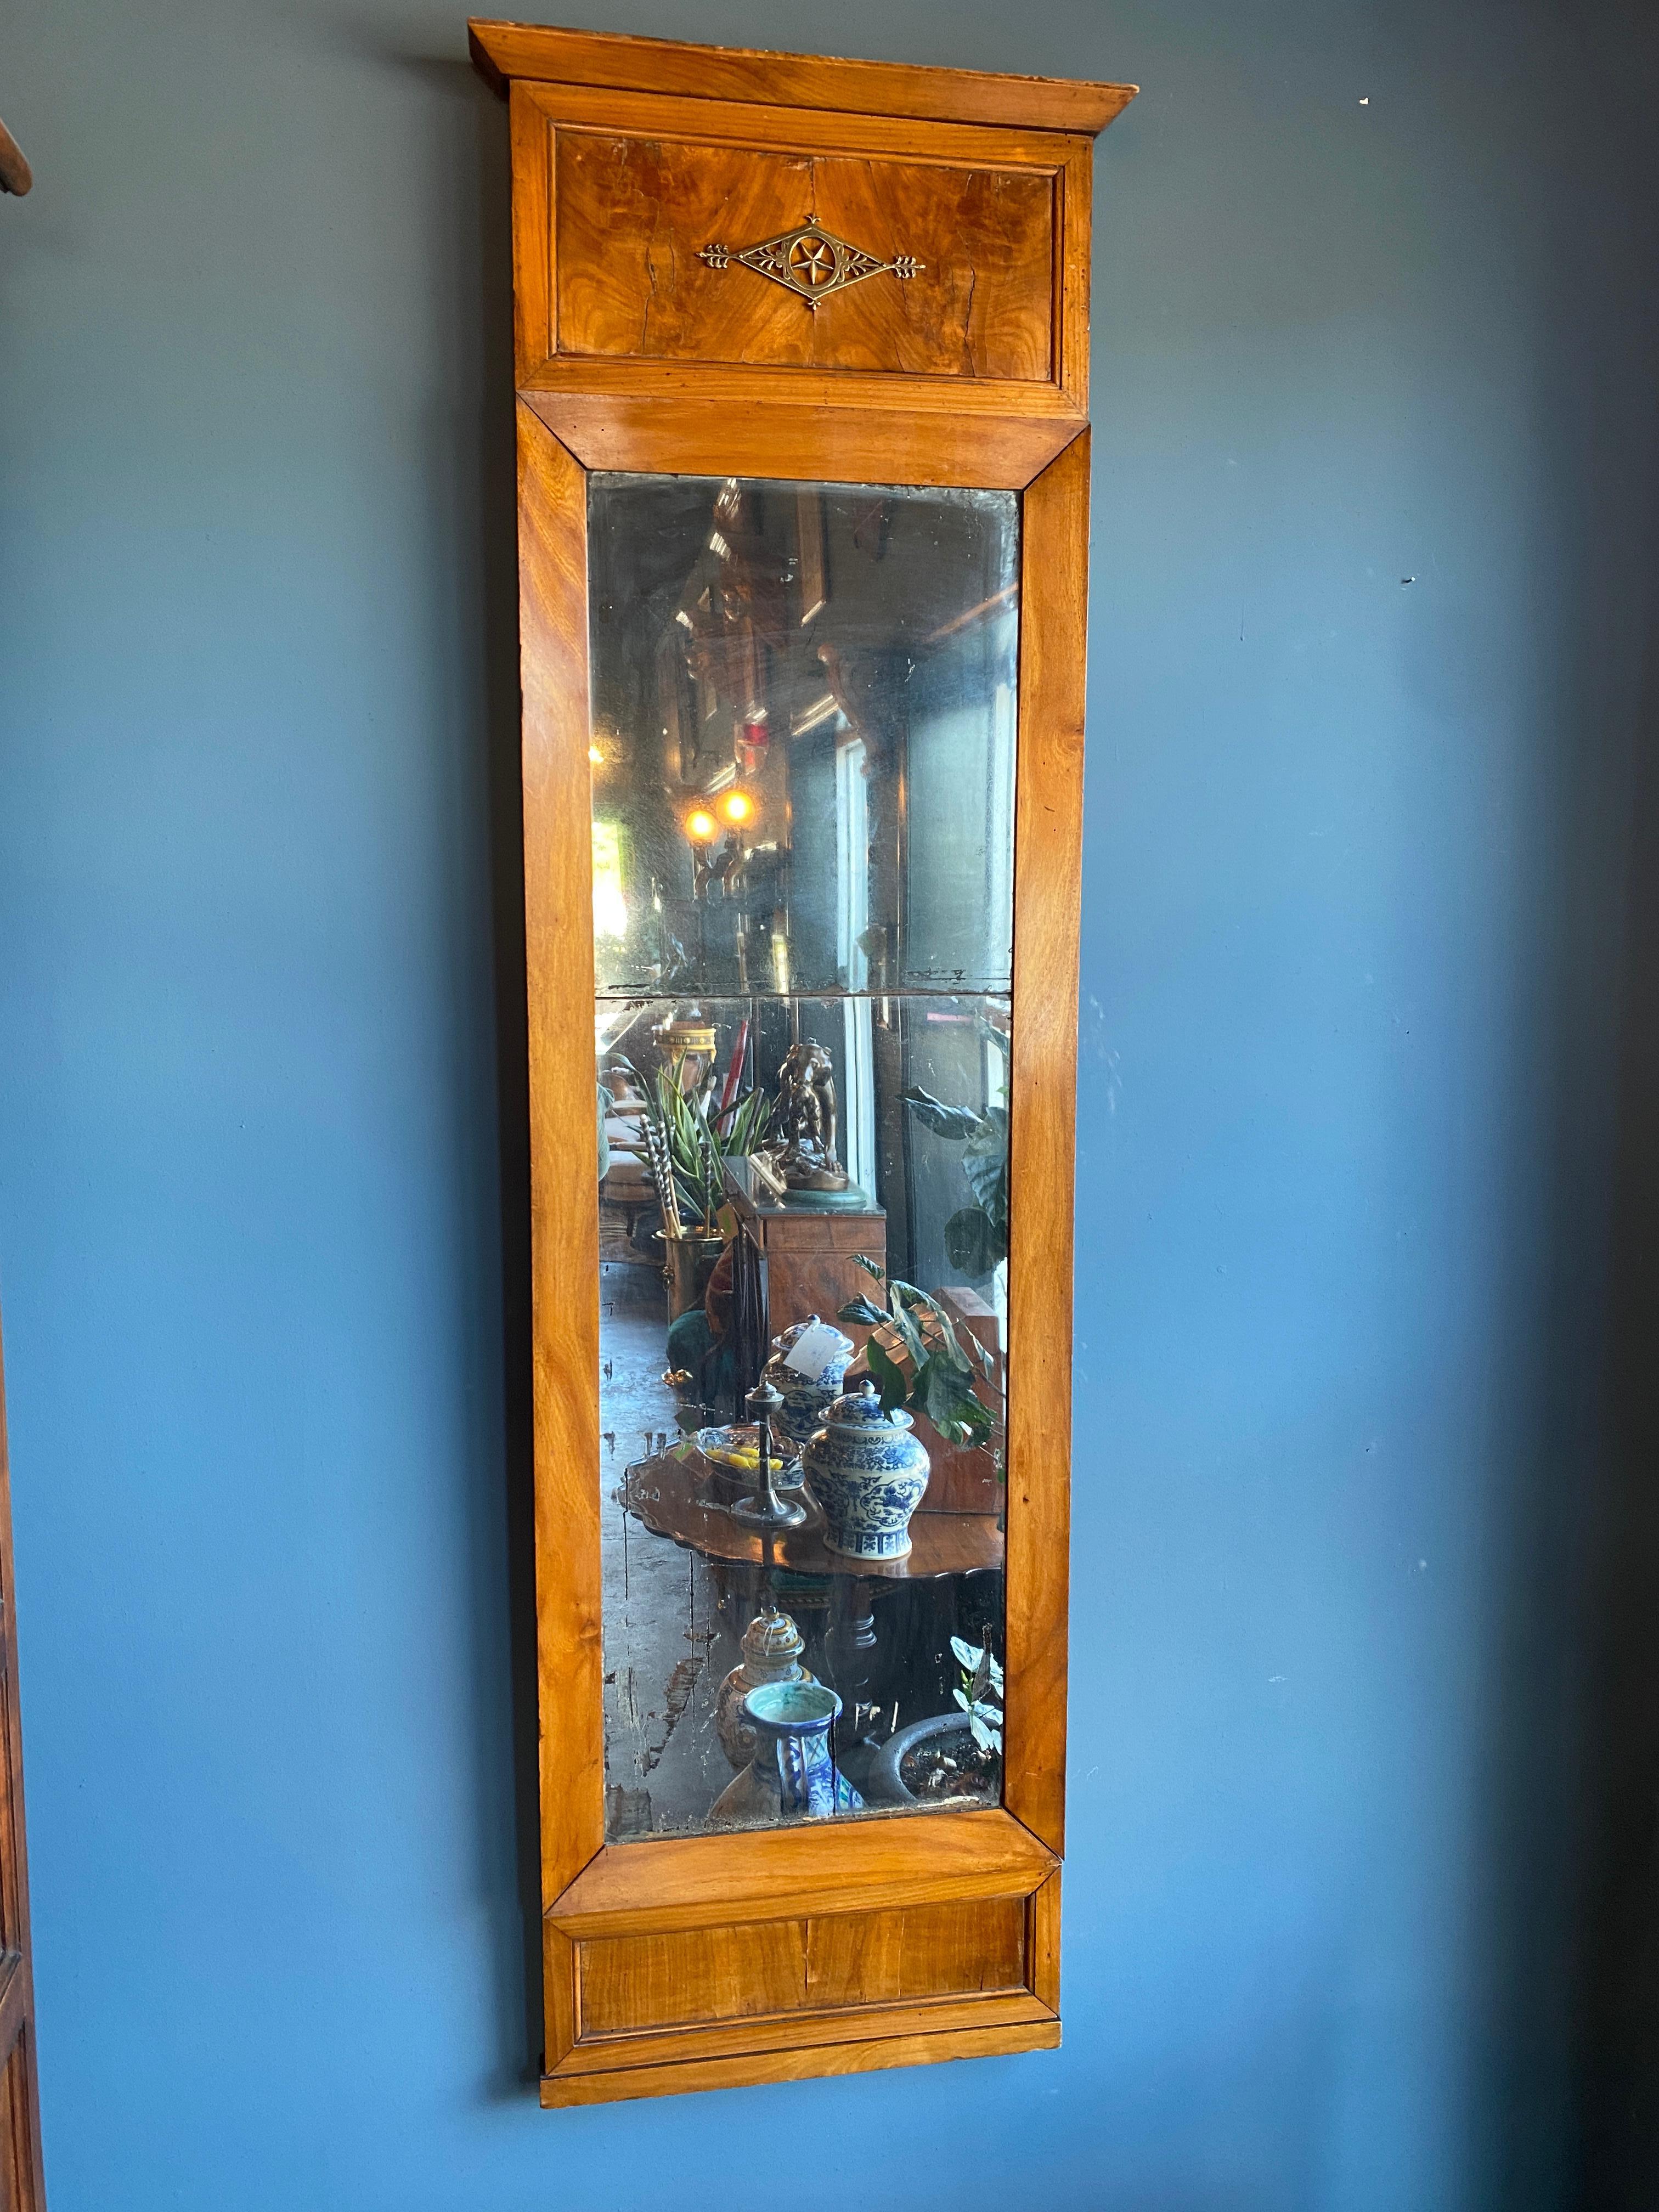 Early 19th century German Biedermeier mirror. Cherrywood frame with original mirror. One single bronze mount on the upper face. Original two piece mirror.